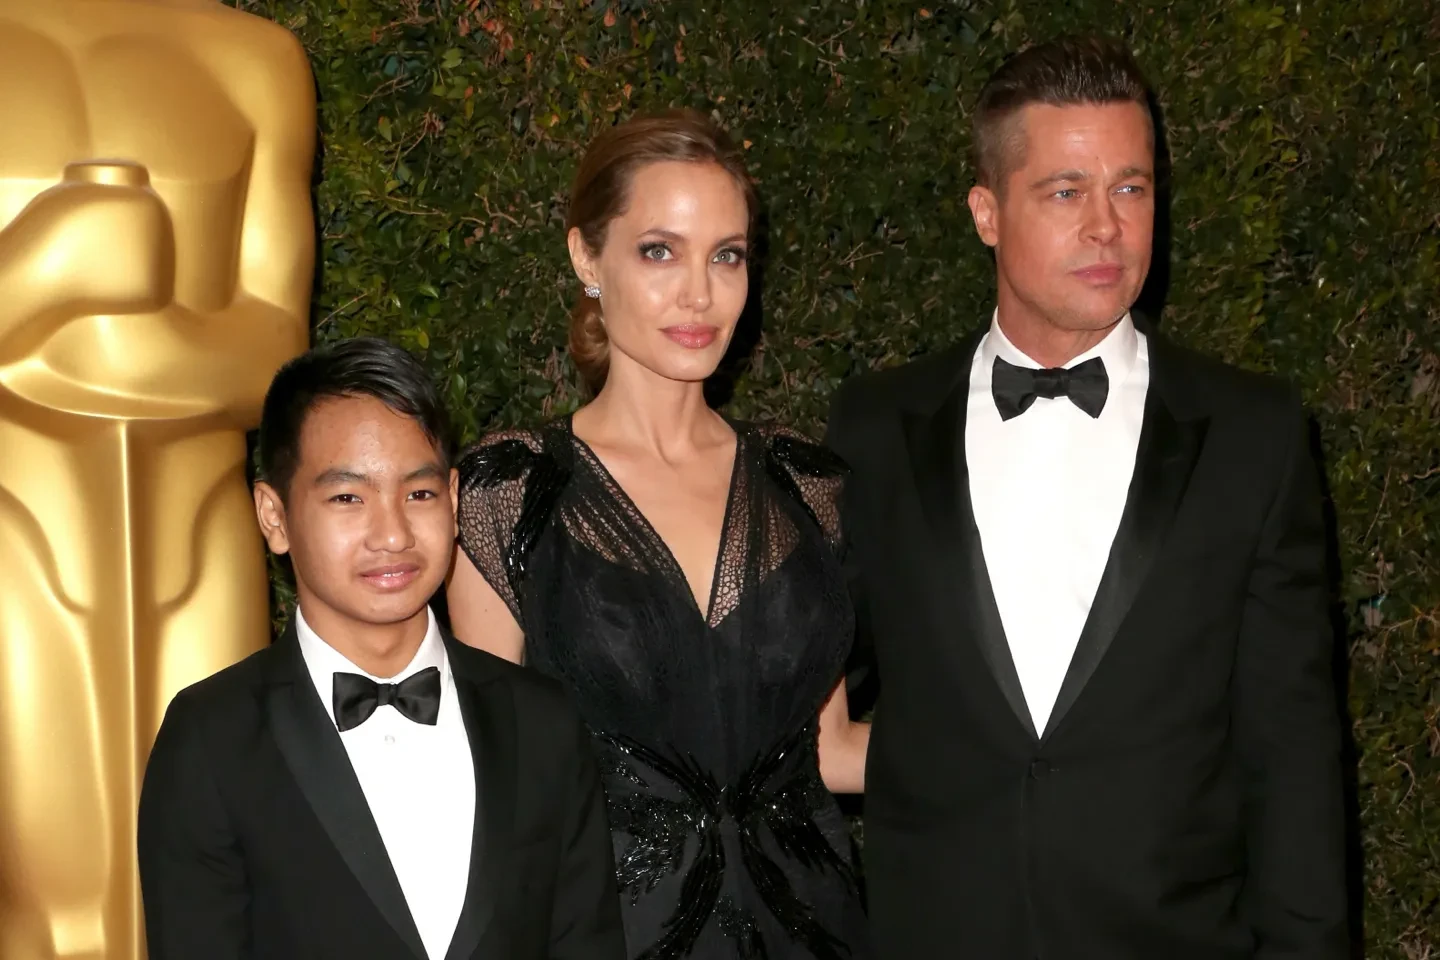 Maddox, Angelina Jolie, and Brad Pitt